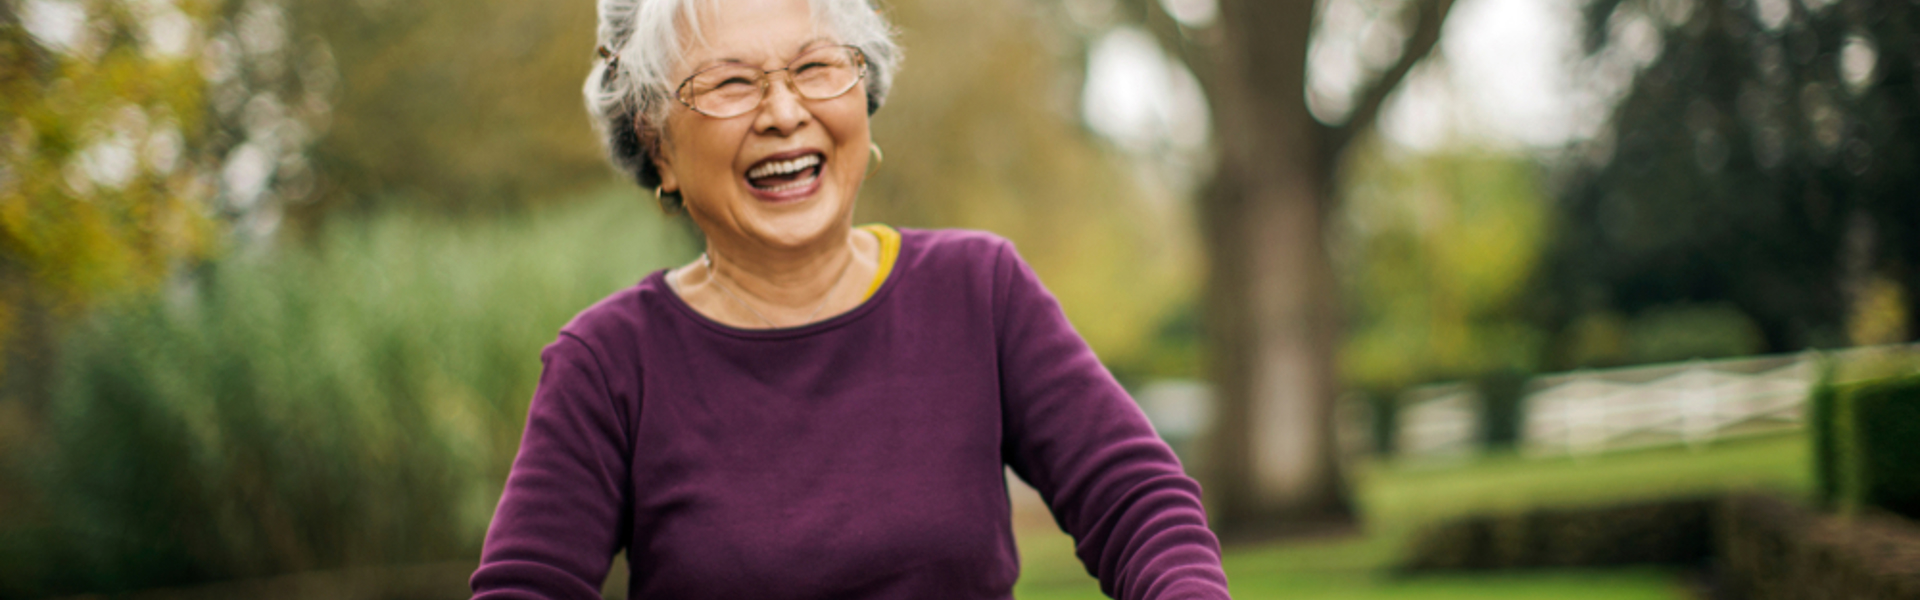 Smiling older woman with walking frame 